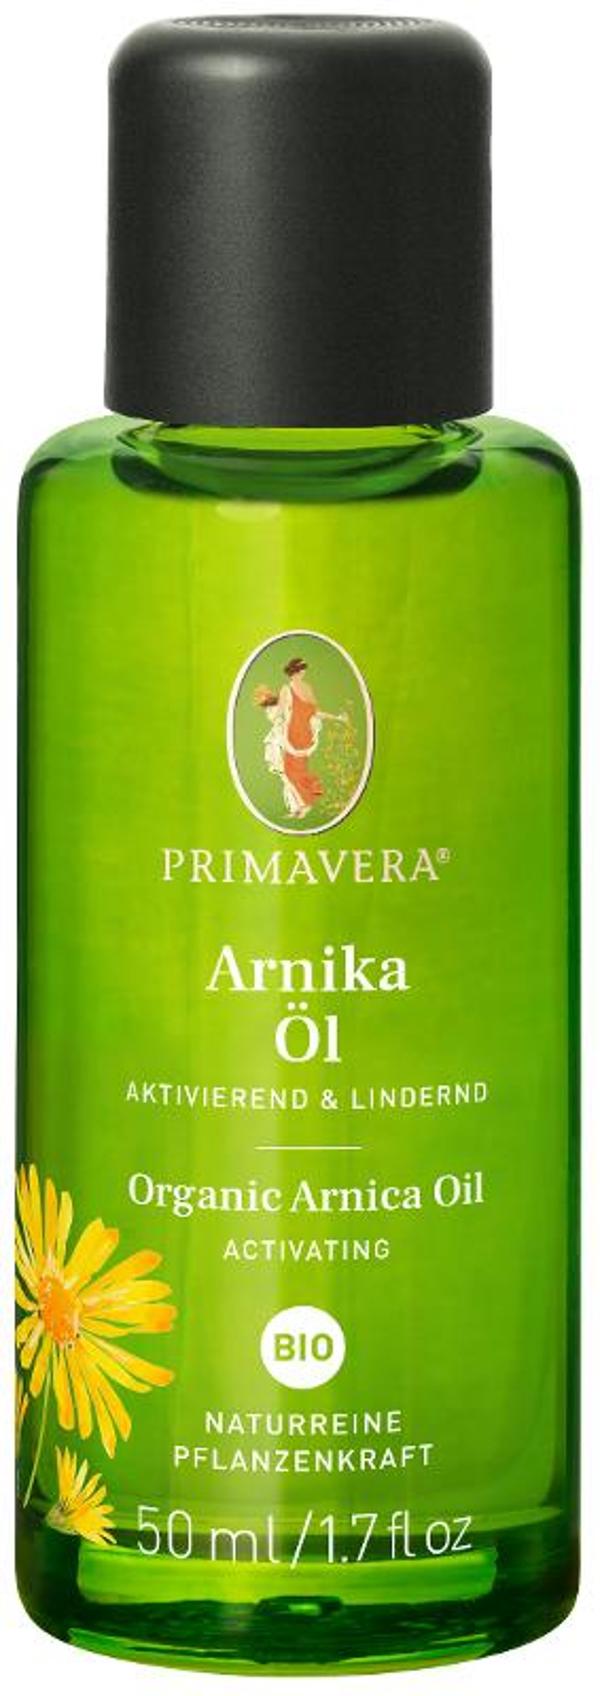 Produktfoto zu Arnikaöl